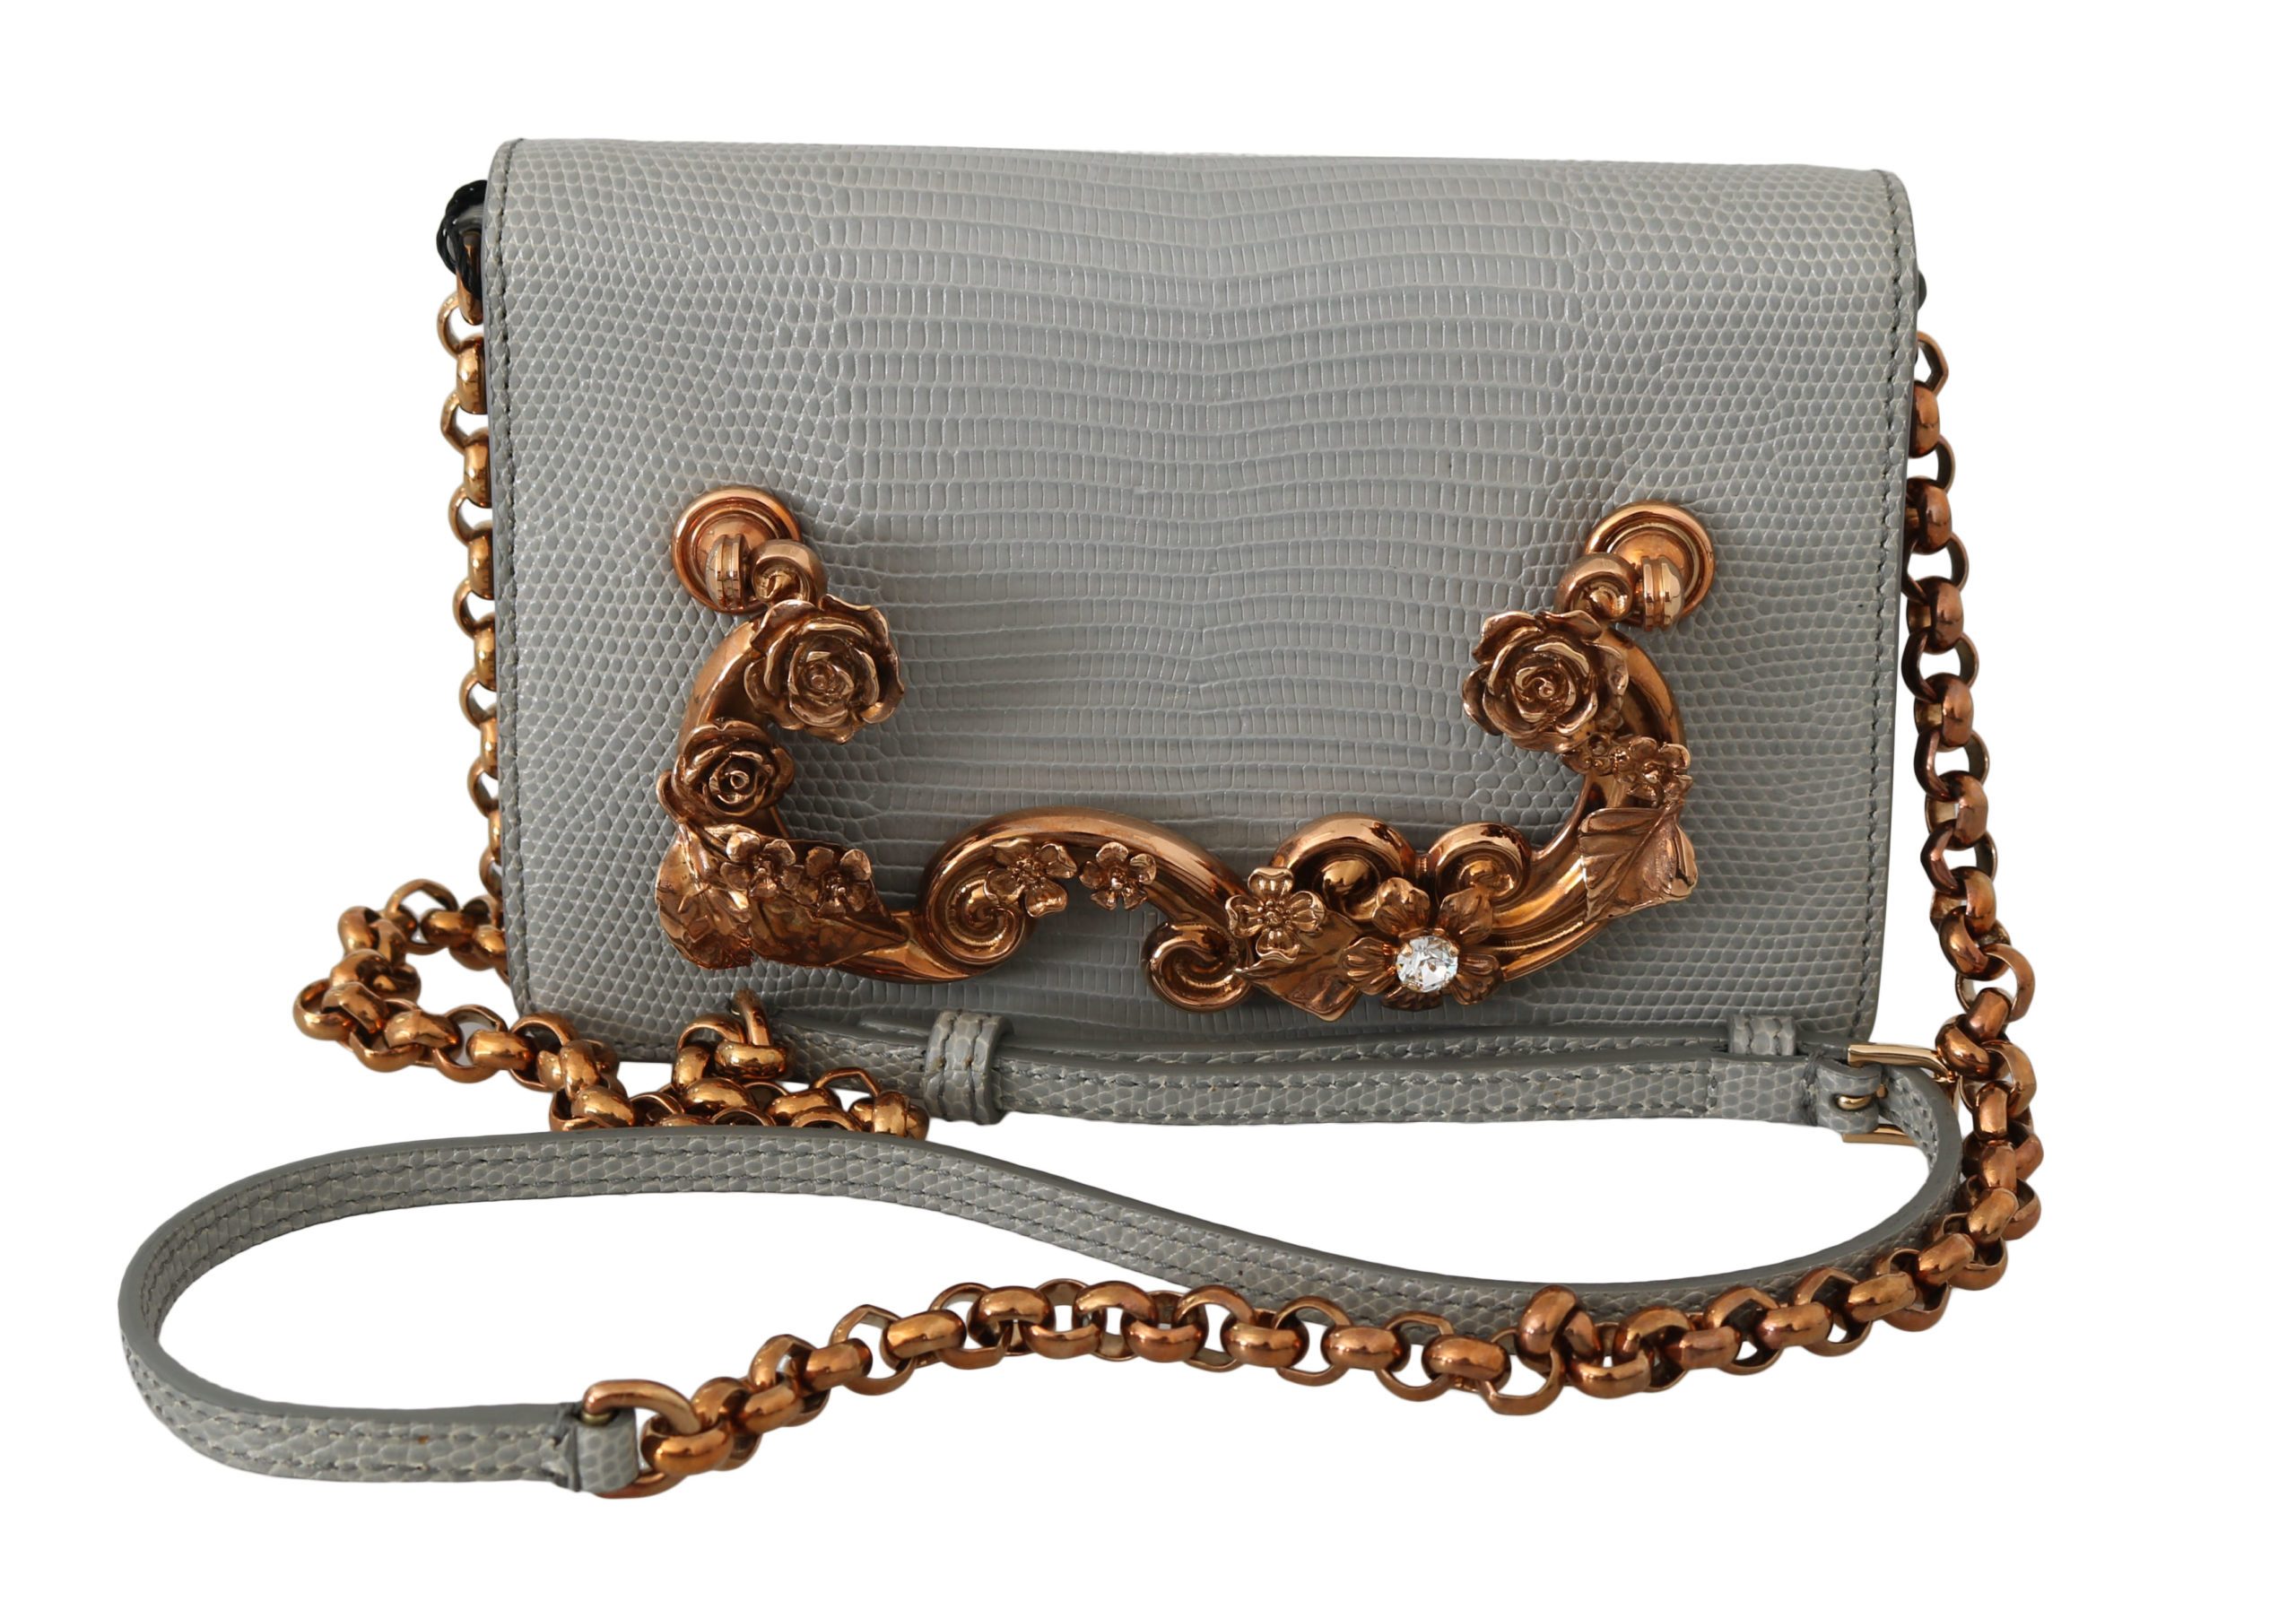 Dolce & Gabbana Women's Lizard Skin Crystal Leather Crossbody Bag Gray VAS8684